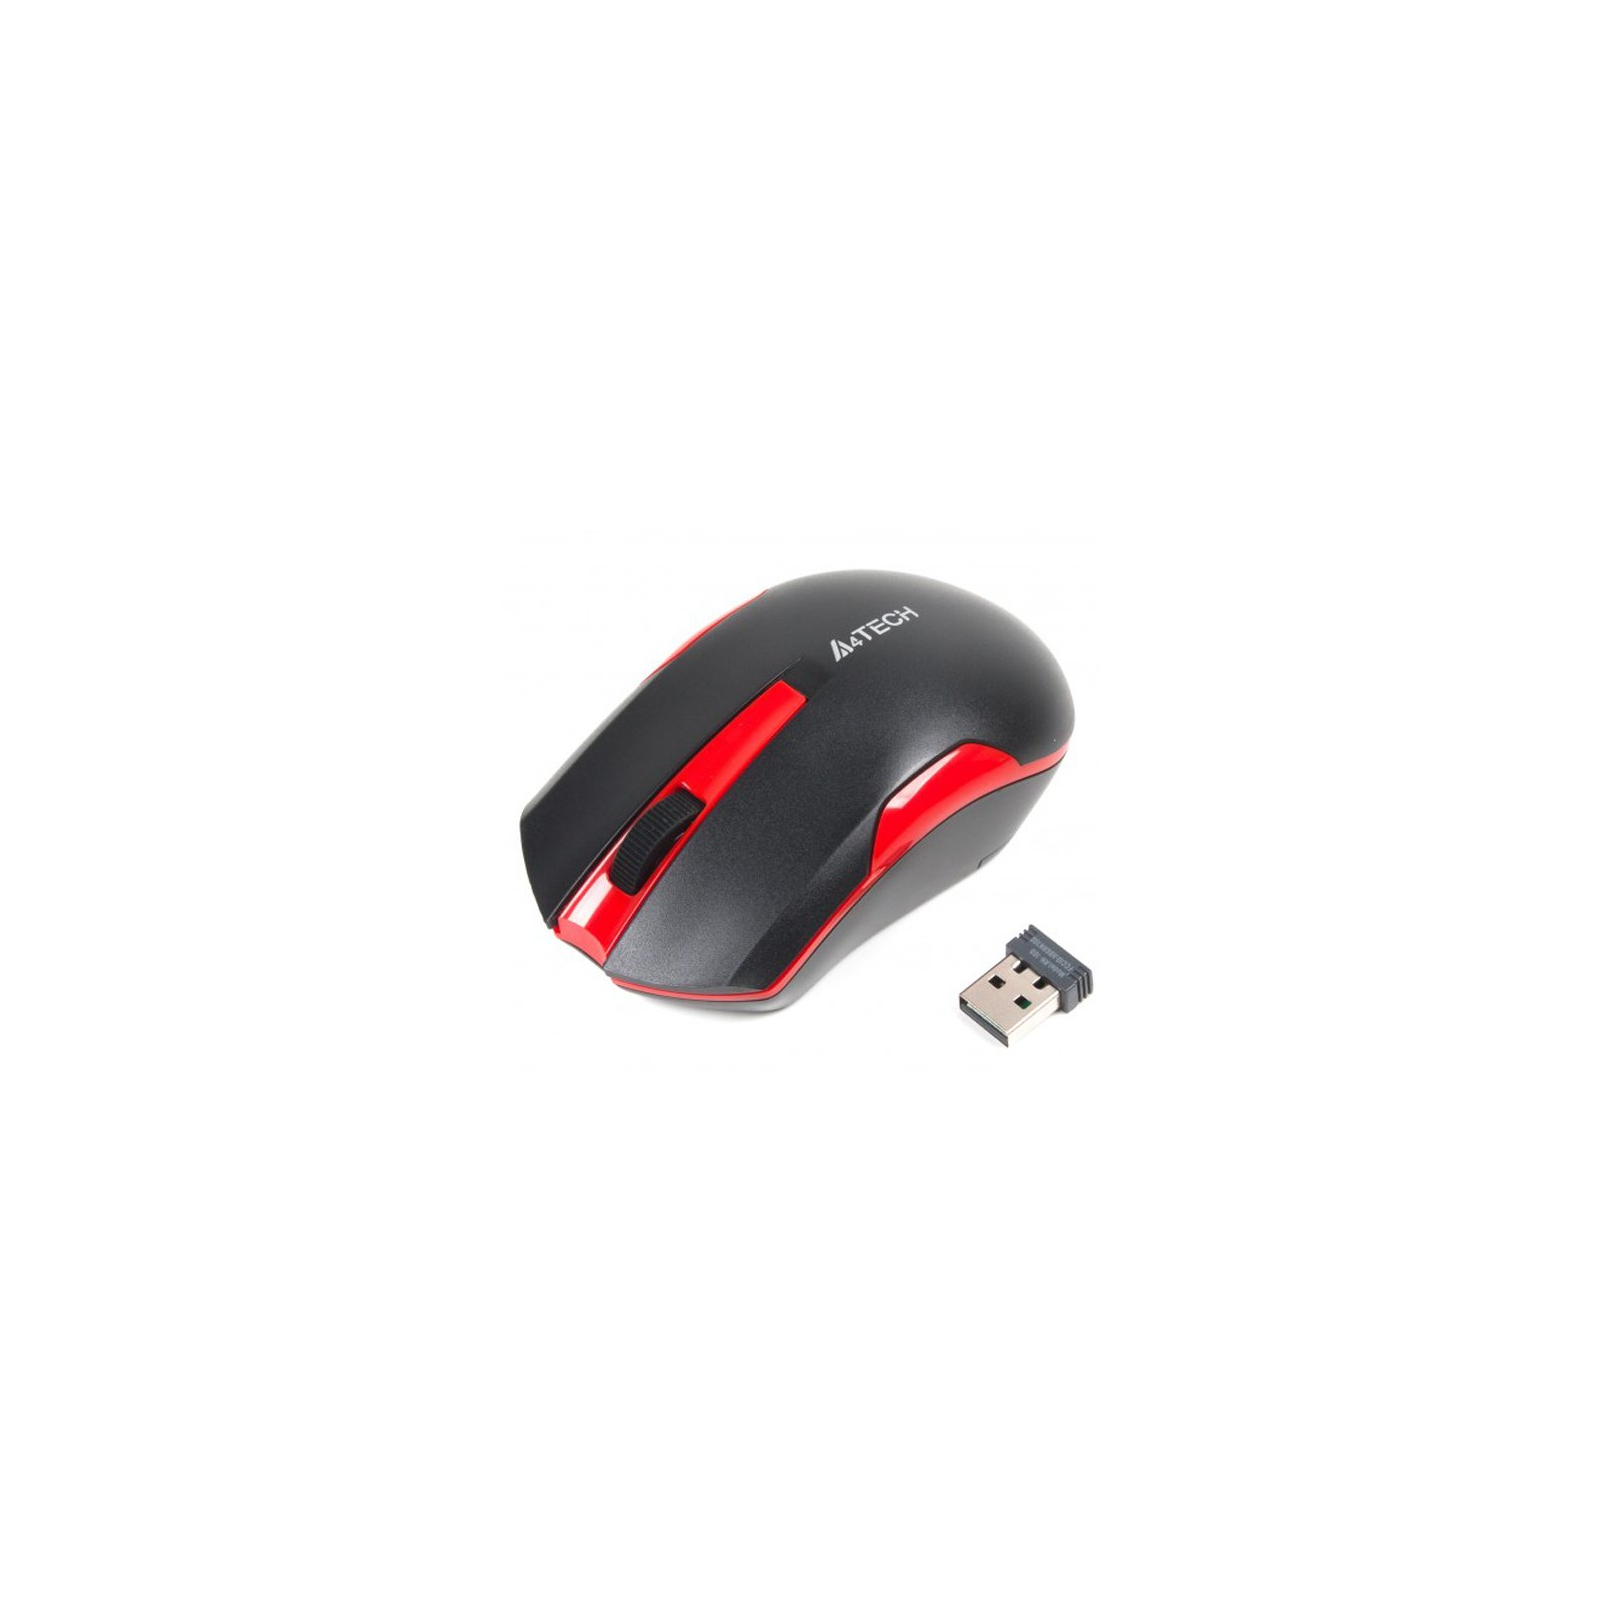 Мышка A4Tech G3-200N Black+Red